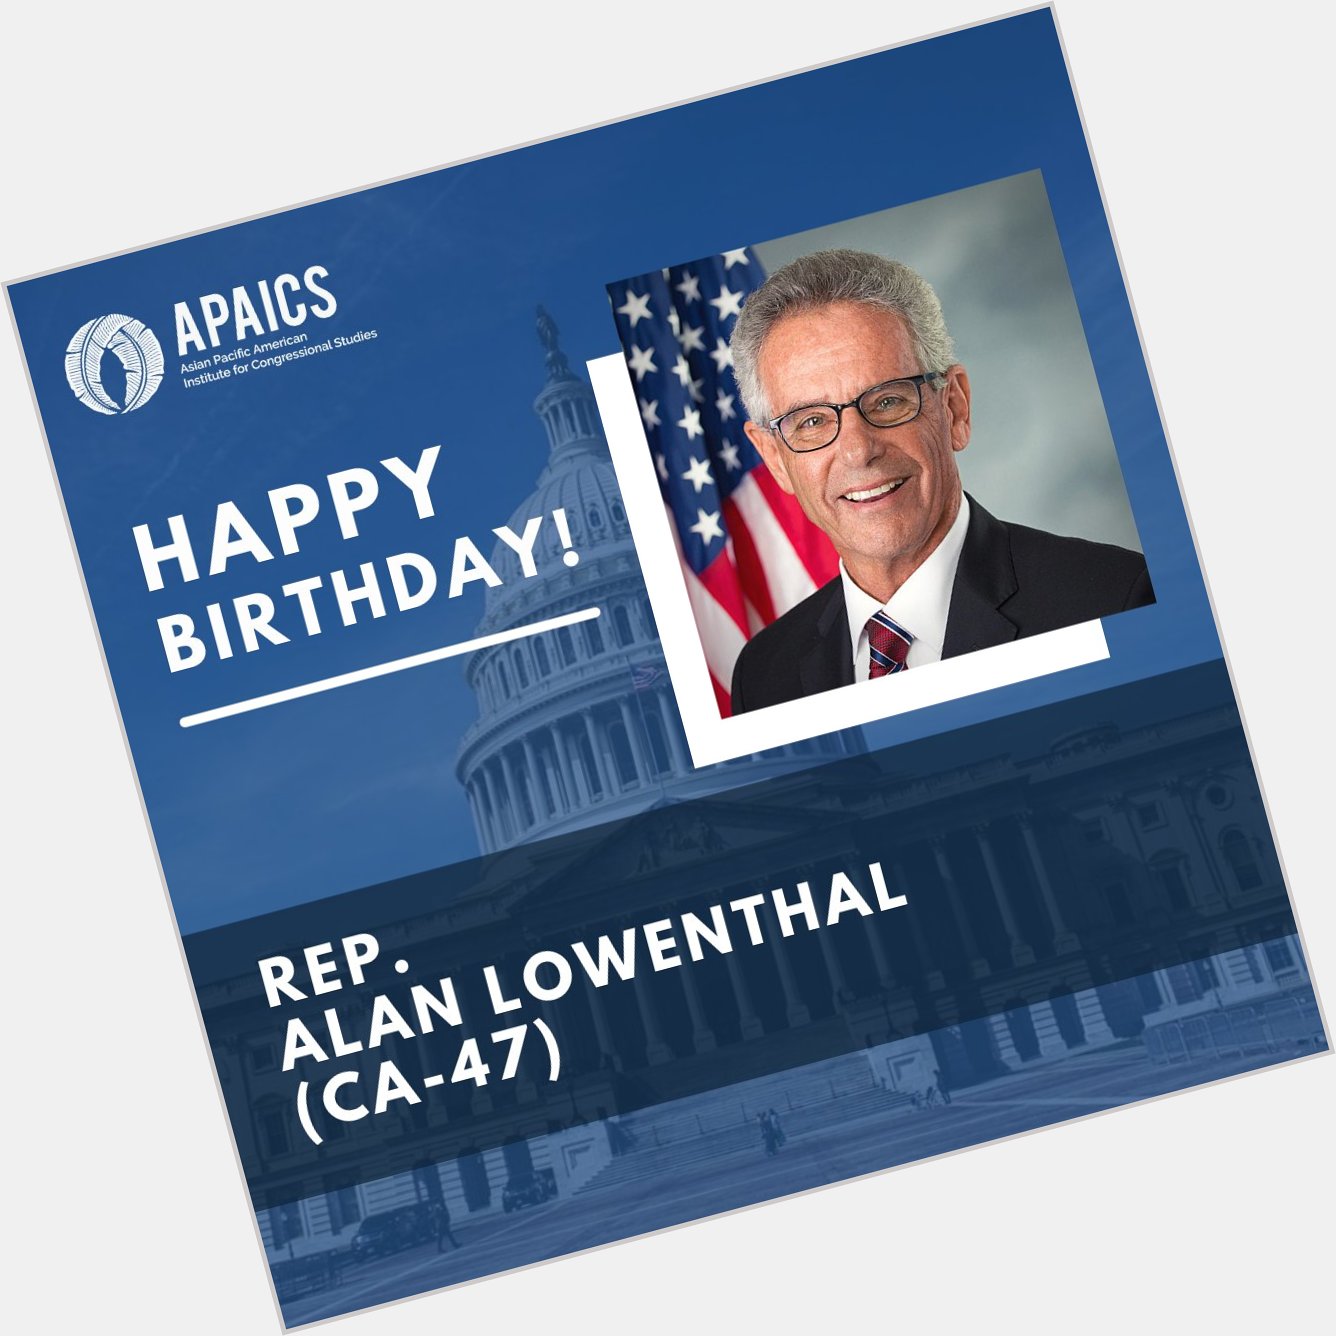 Happy birthday to member Alan Lowenthal 